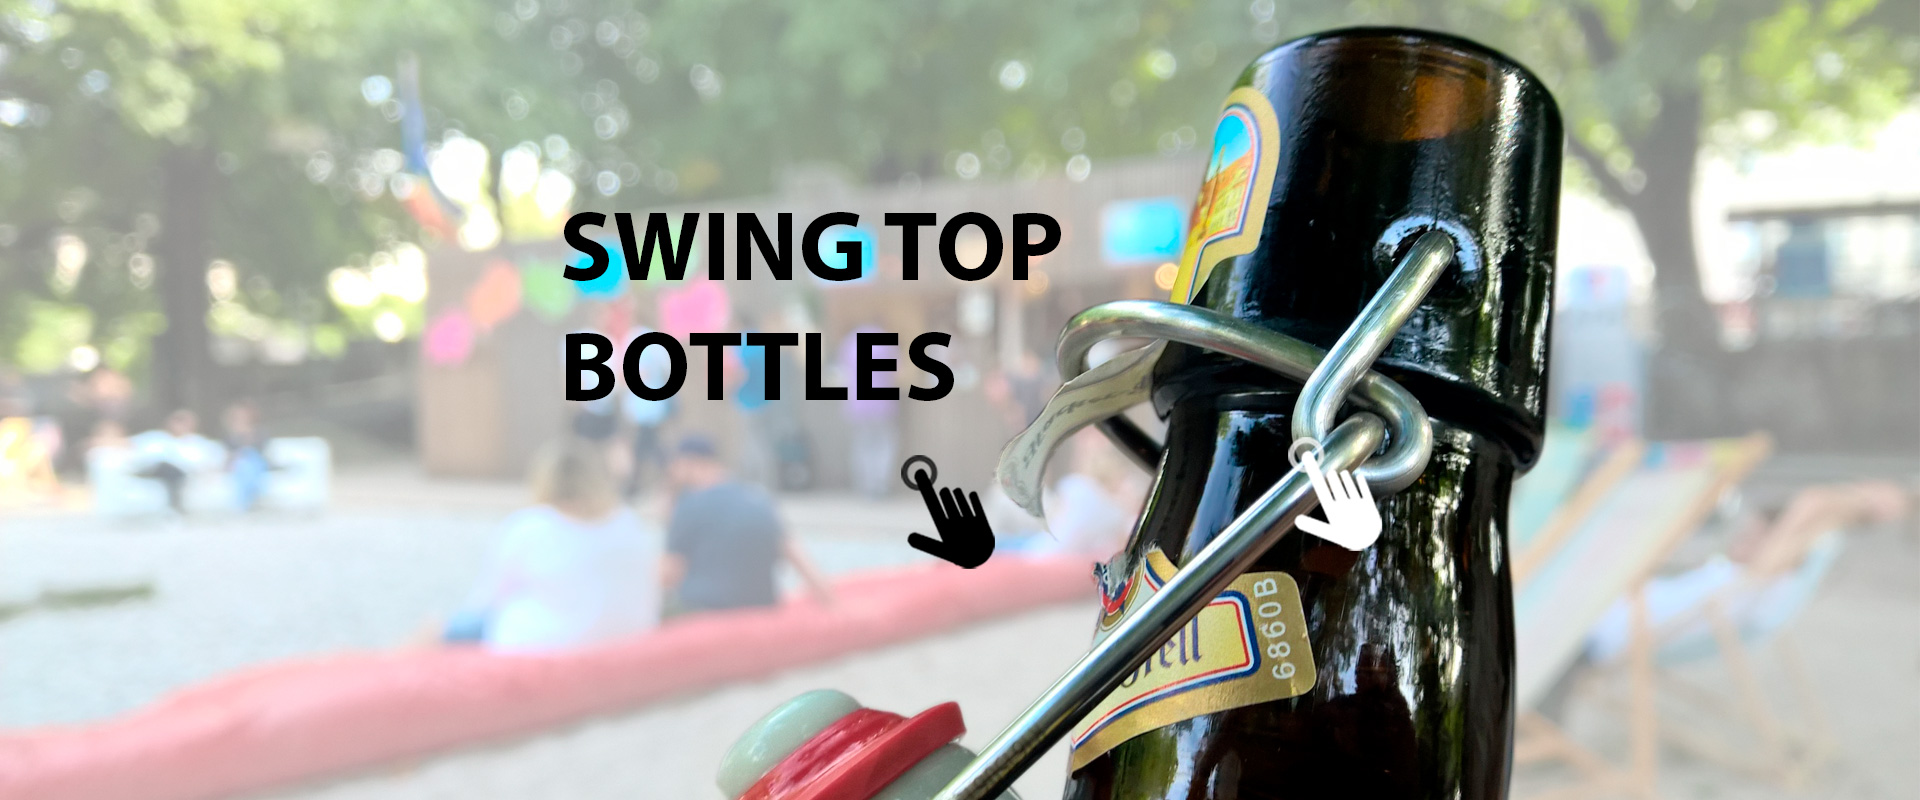 Inspection of swing top bottles